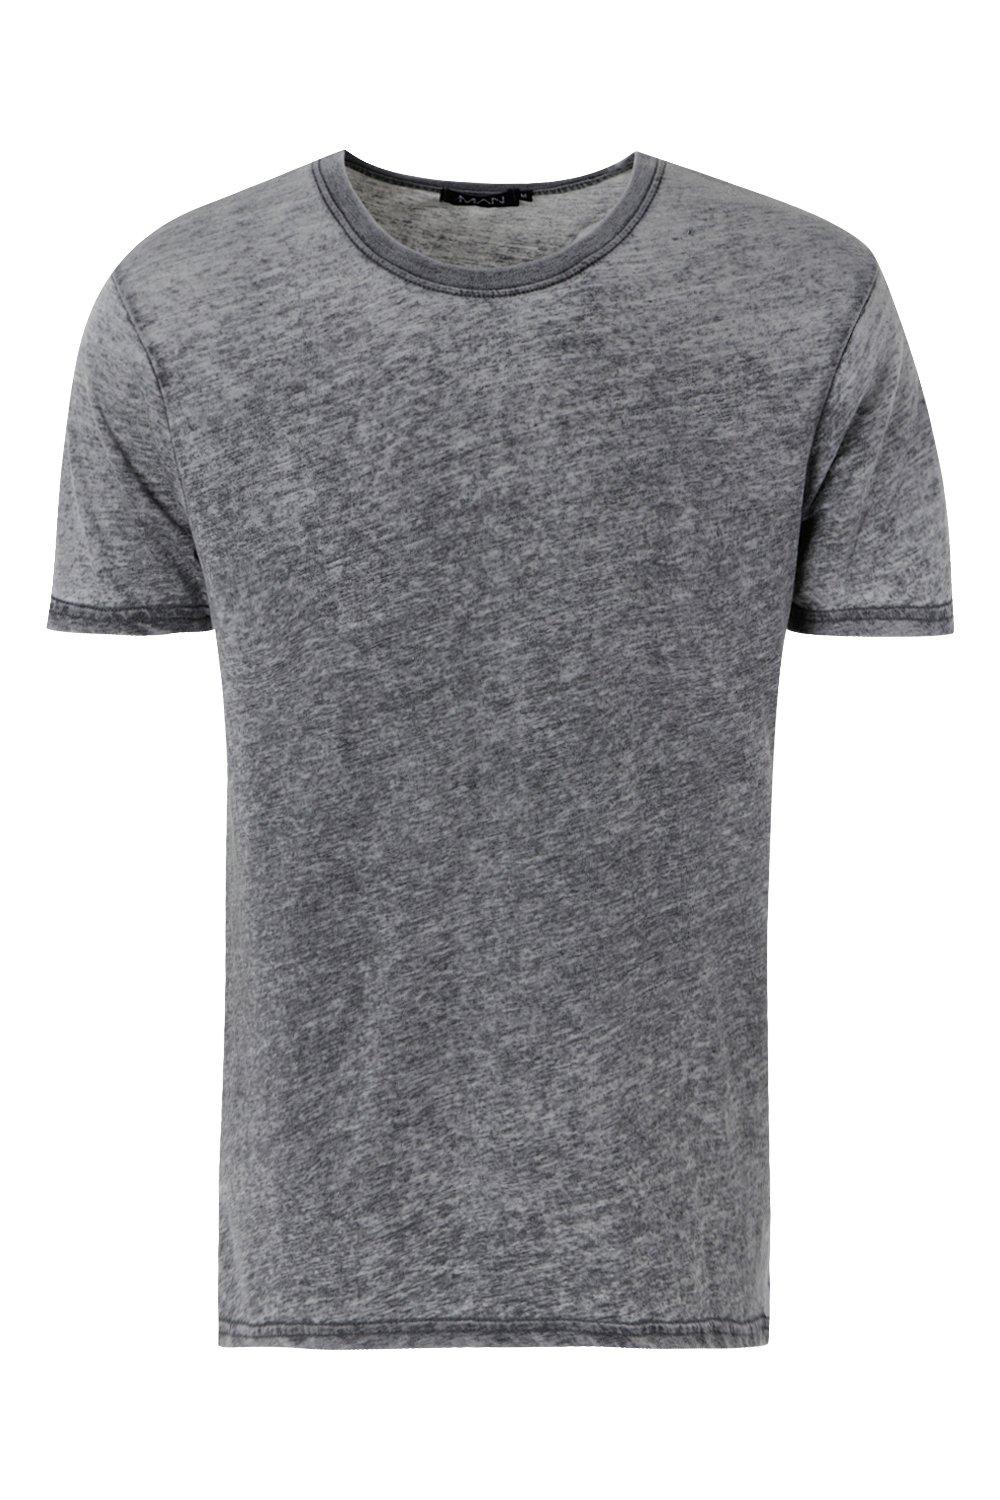 https://media.boohoo.com/i/boohoo/mzz60810_charcoal_xl_2/male-charcoal-burnout-t-shirt